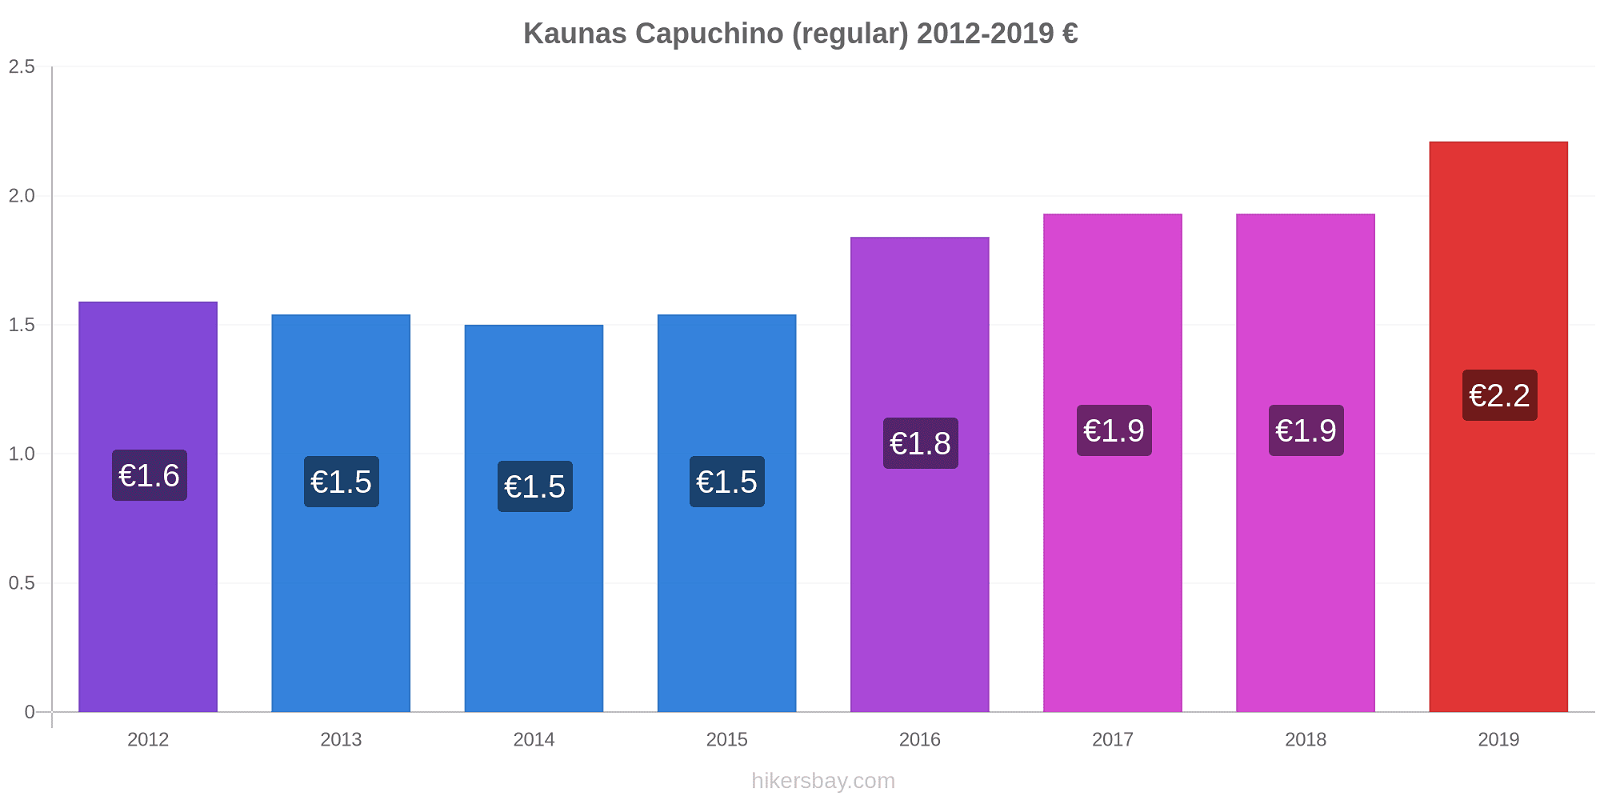 Kaunas cambios de precios Capuchino (regular) hikersbay.com